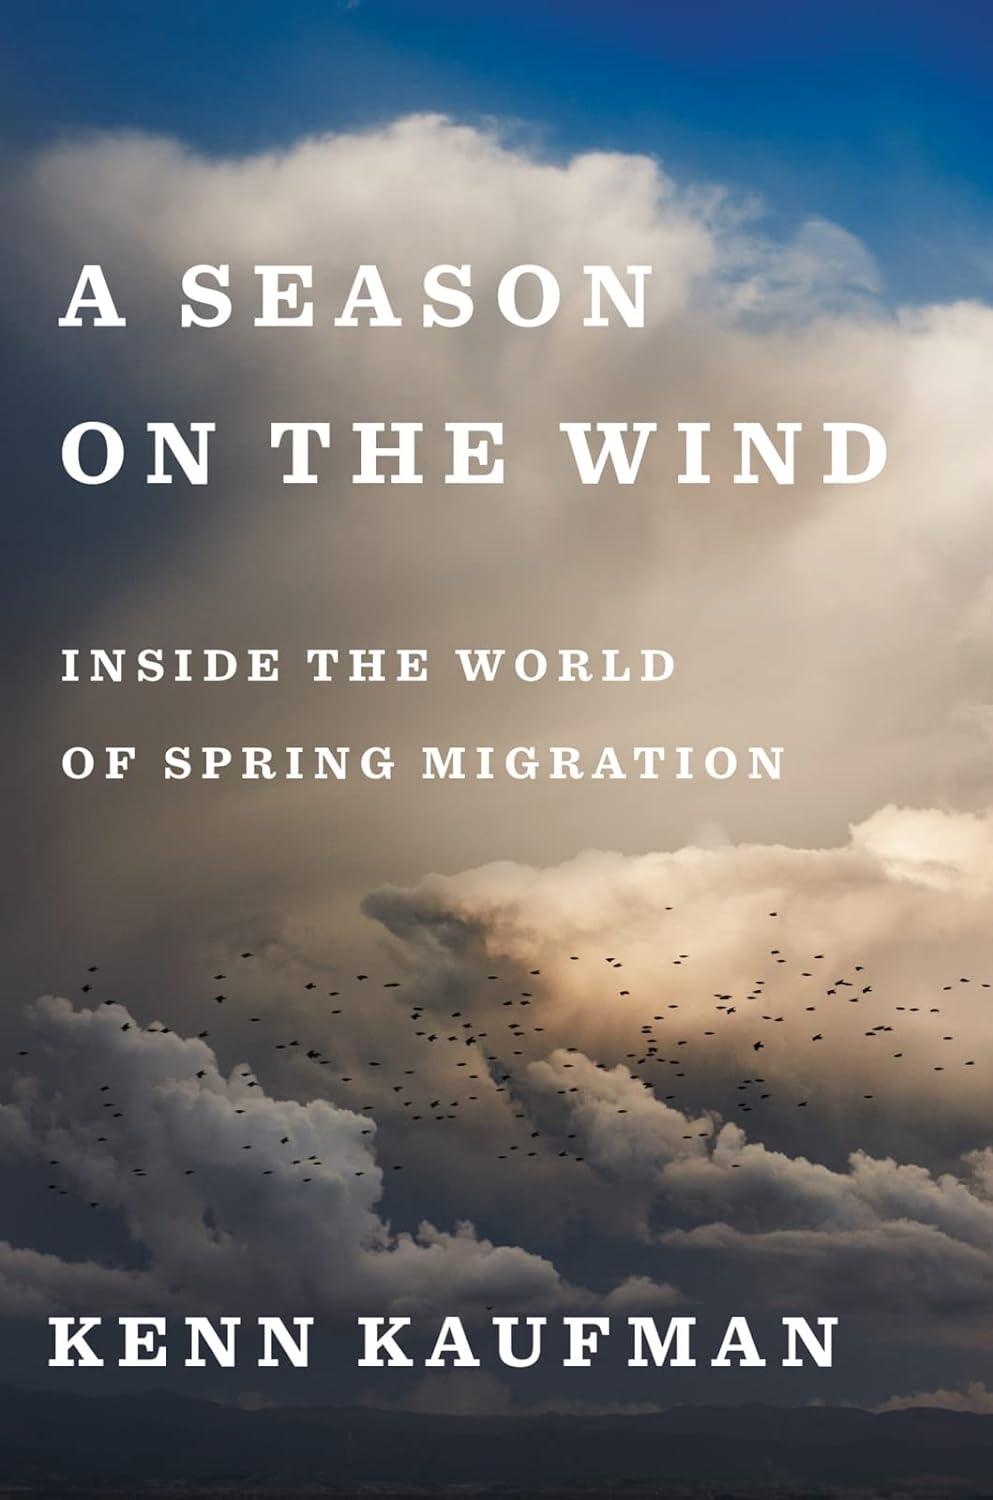 Season on the Wind